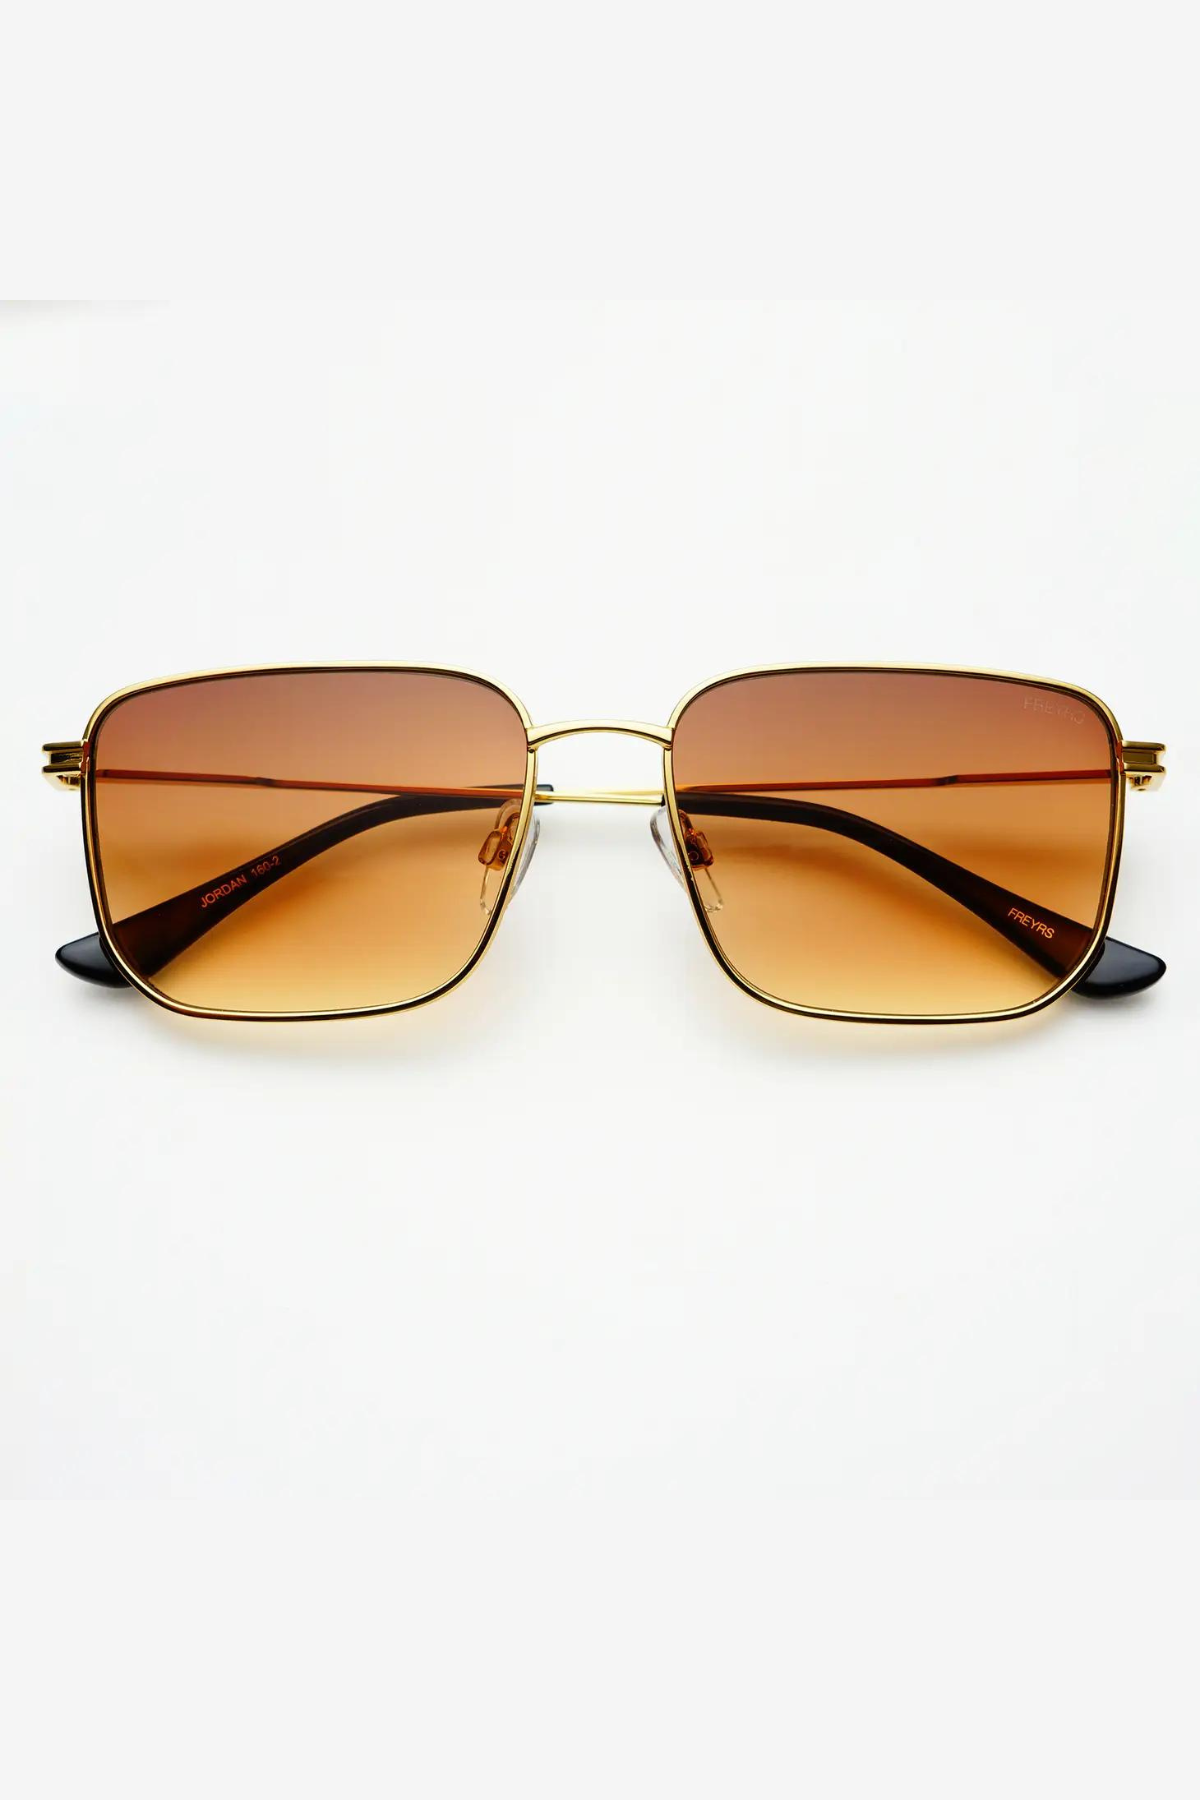 FREYRS: Jordan Sunglasses